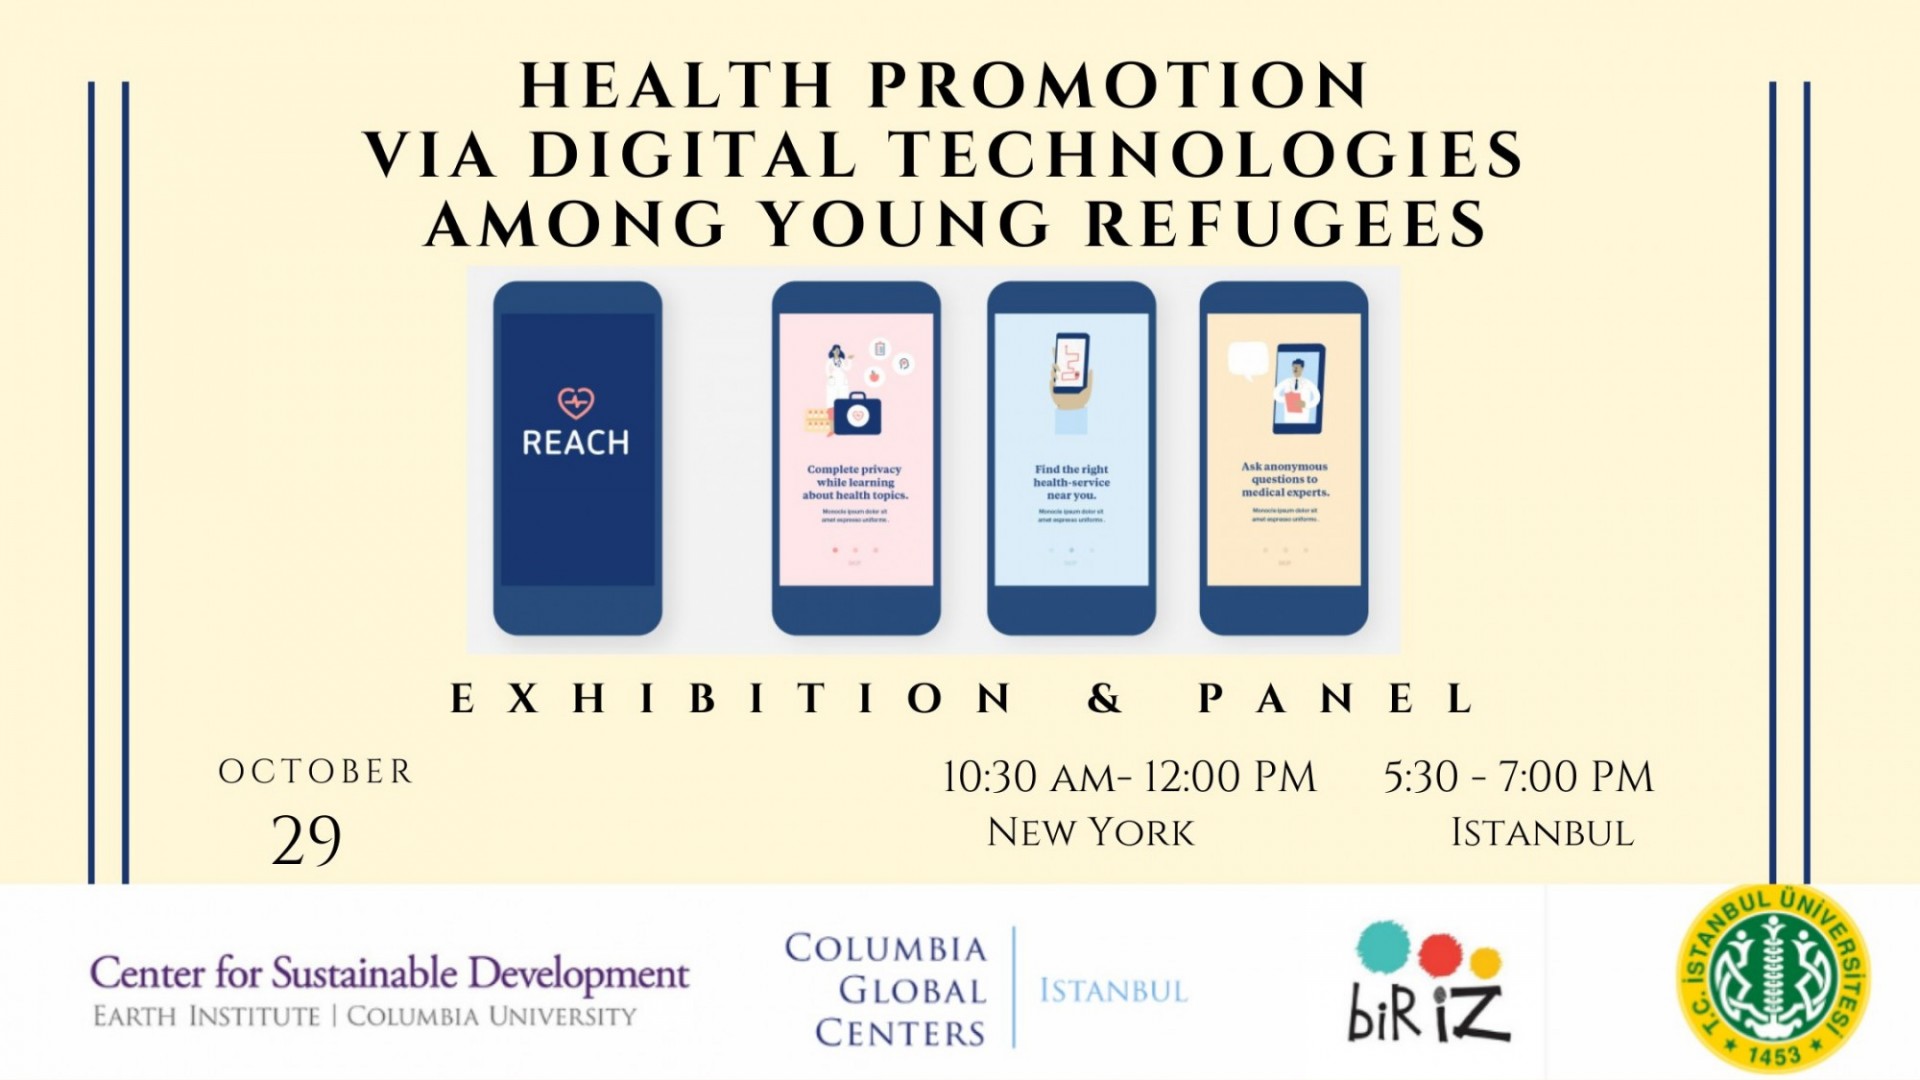 Health Promotion via Digital Technologies among Young Refugees  
